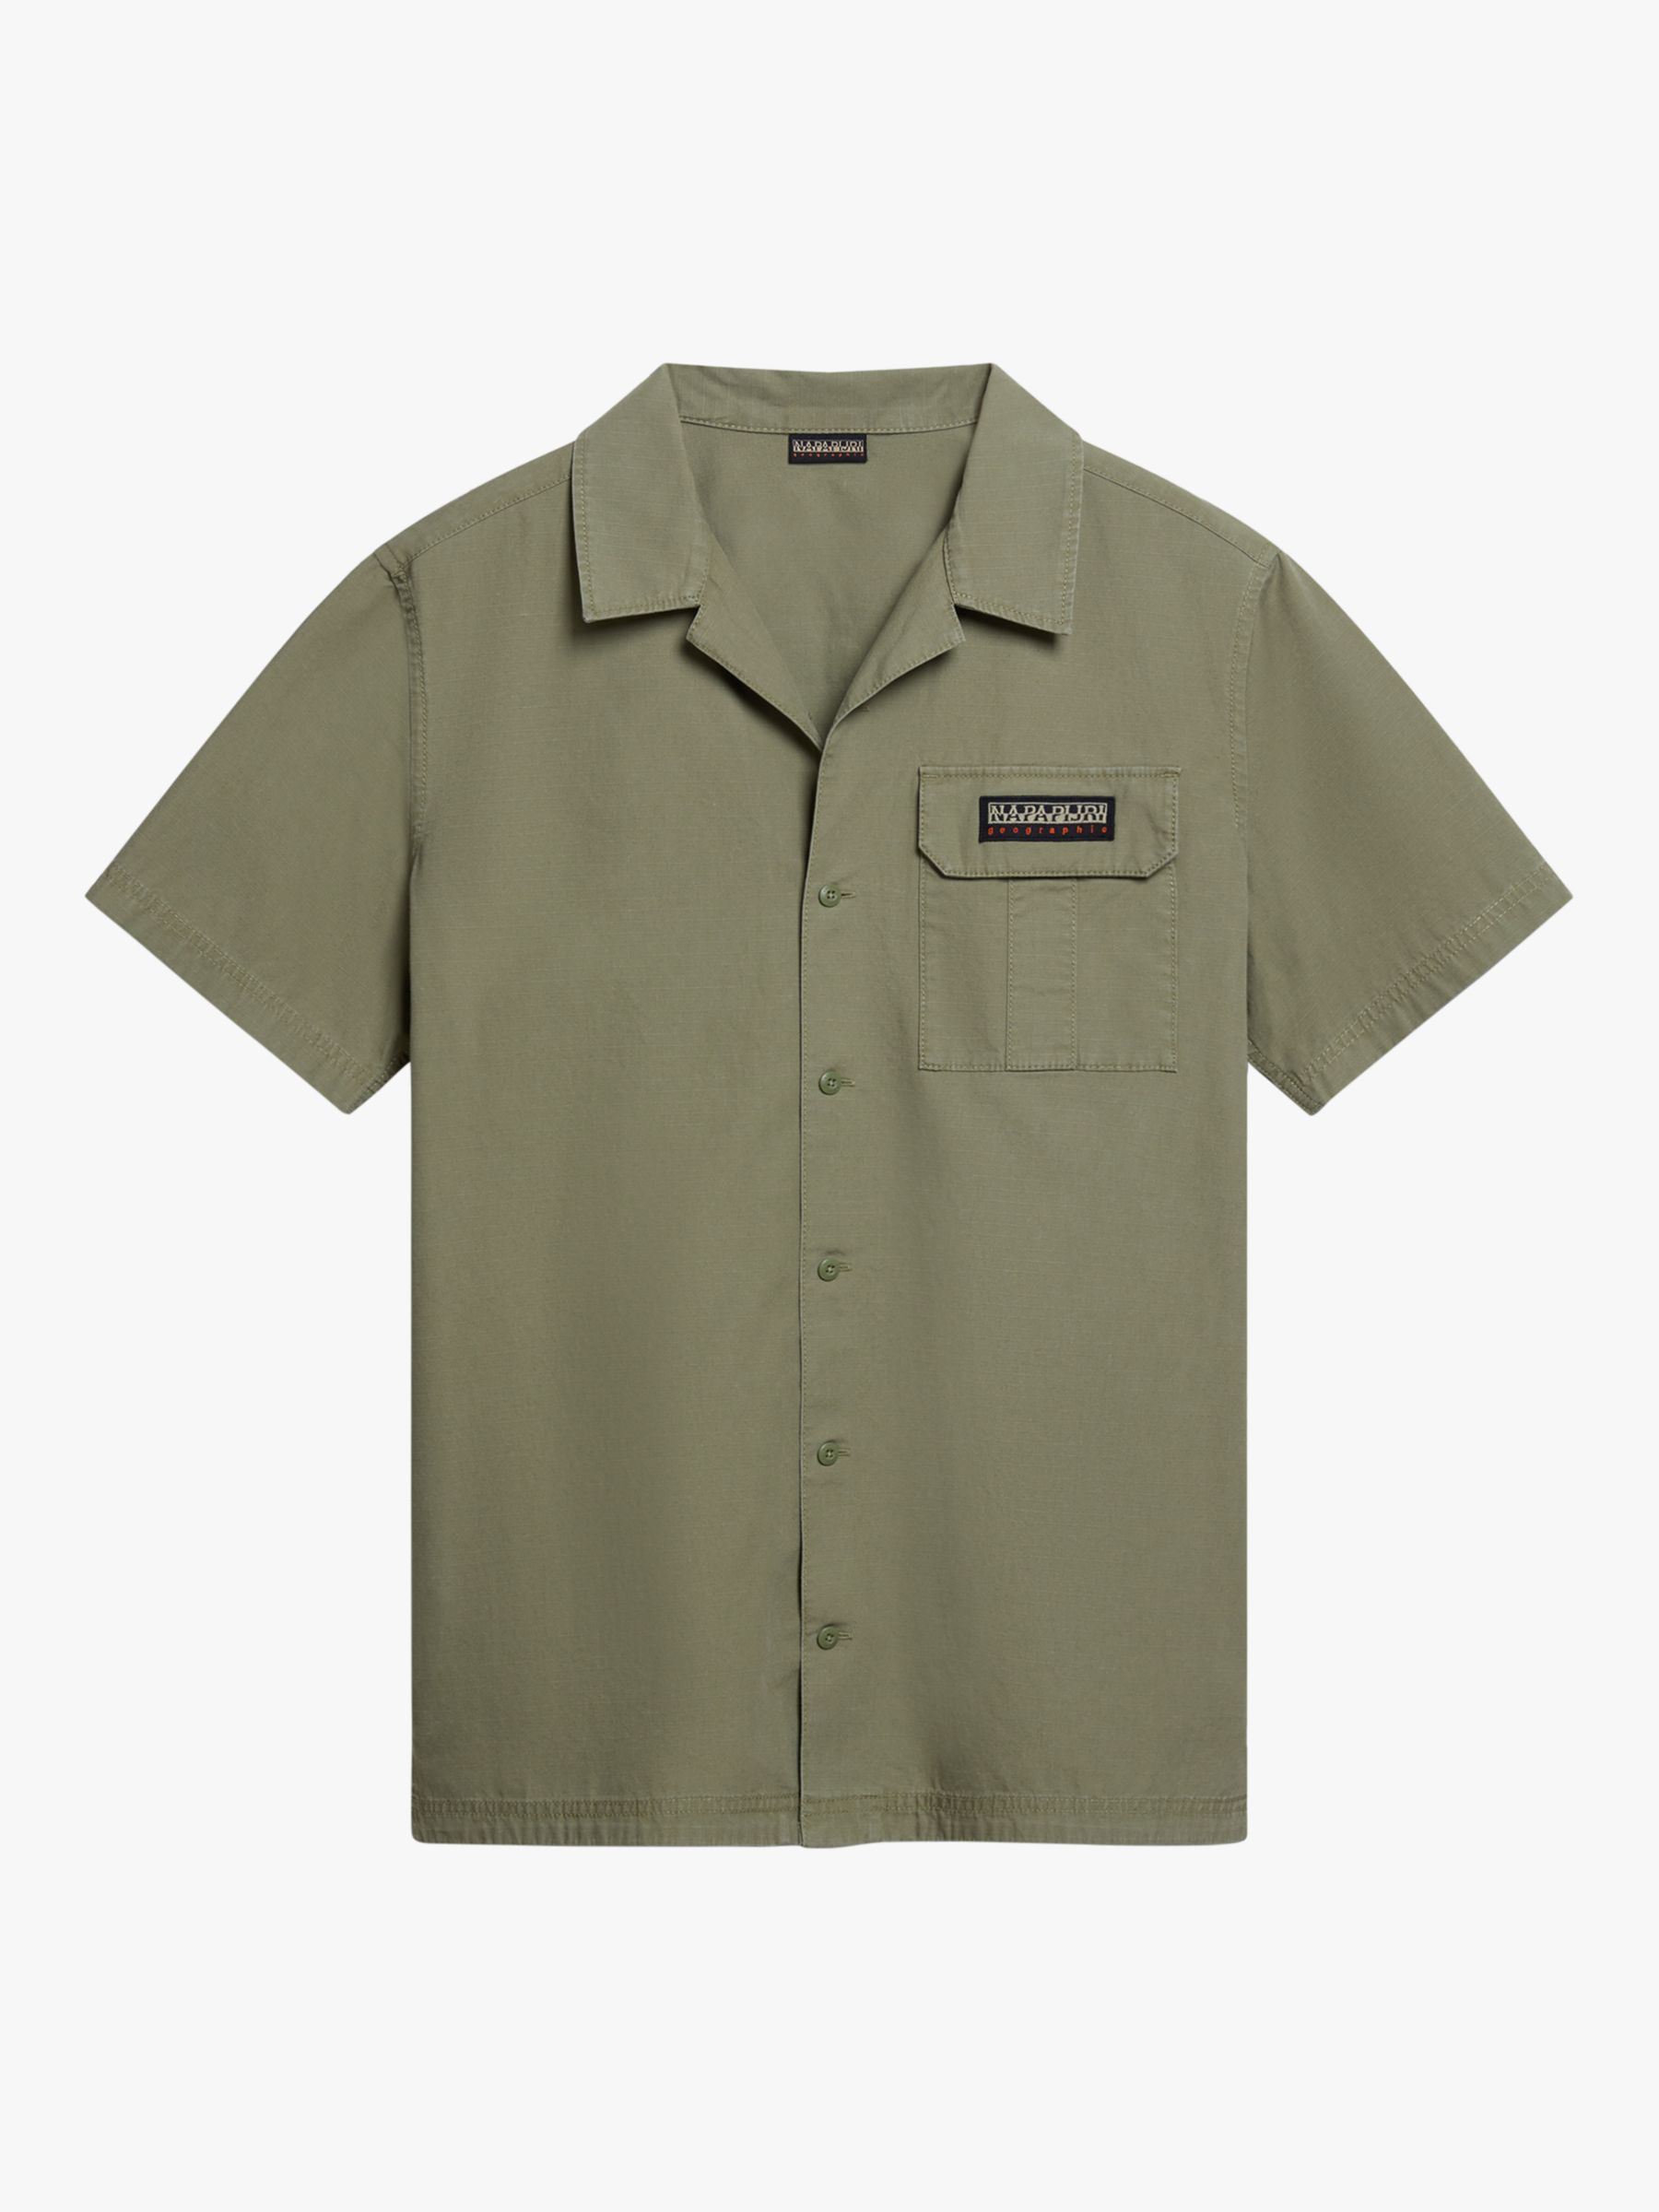 Napapijri Boyd Cotton Short Sleeve Shirt, Light Green, XL